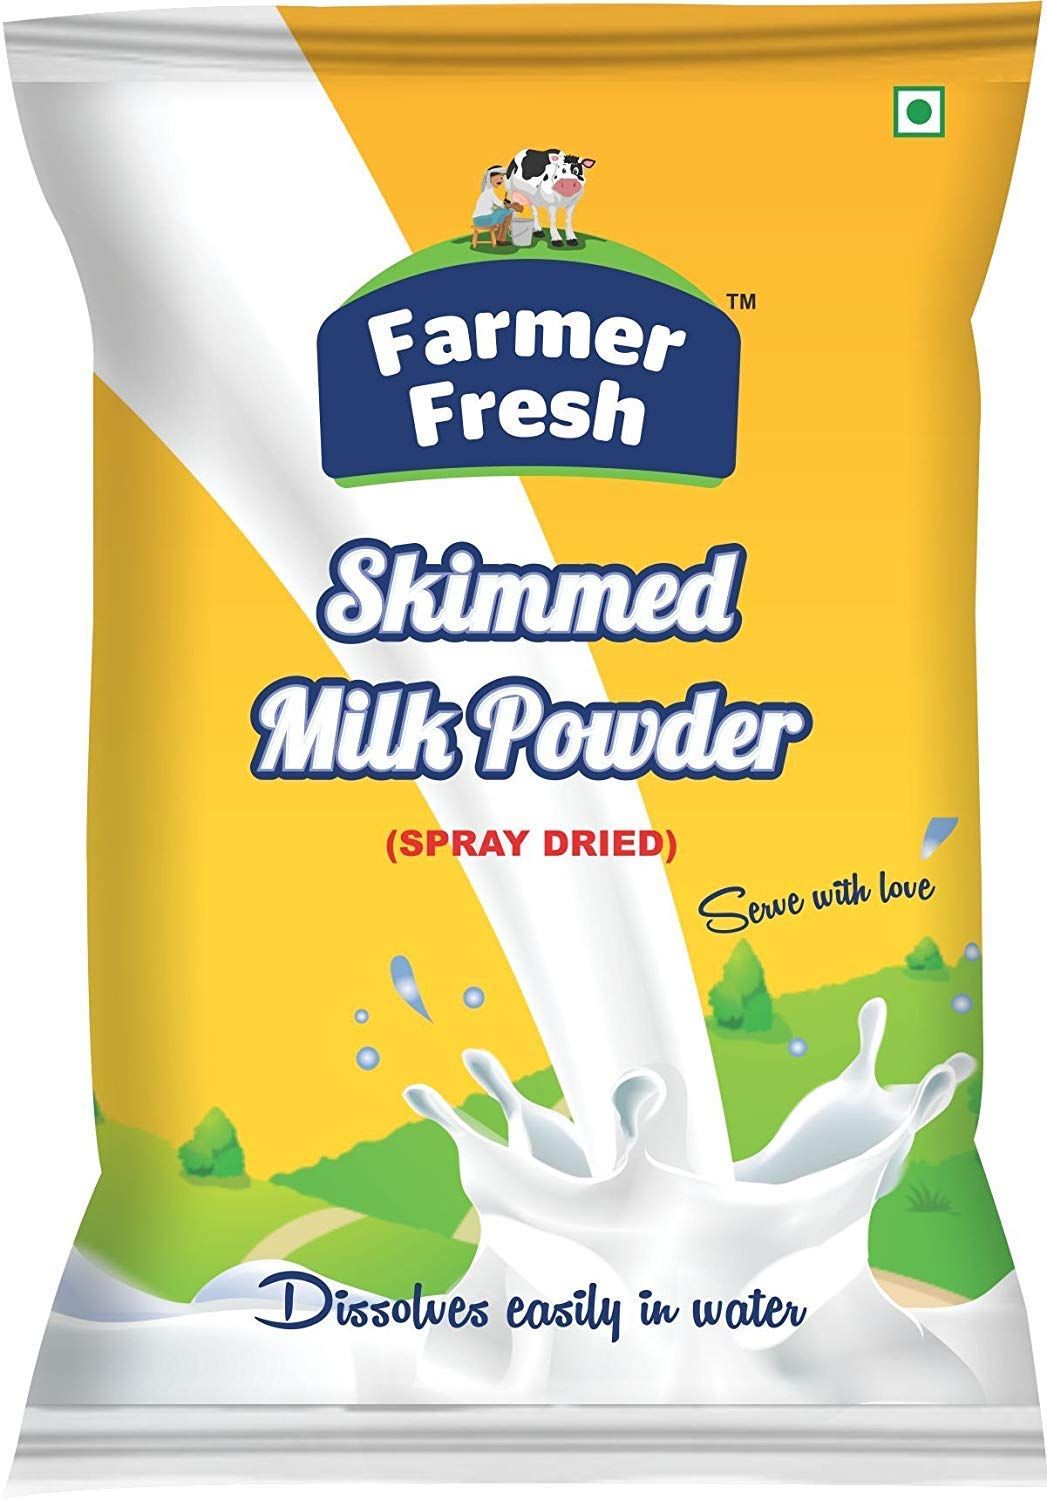 Farmer Fresh Skimmed Milk Powder Image